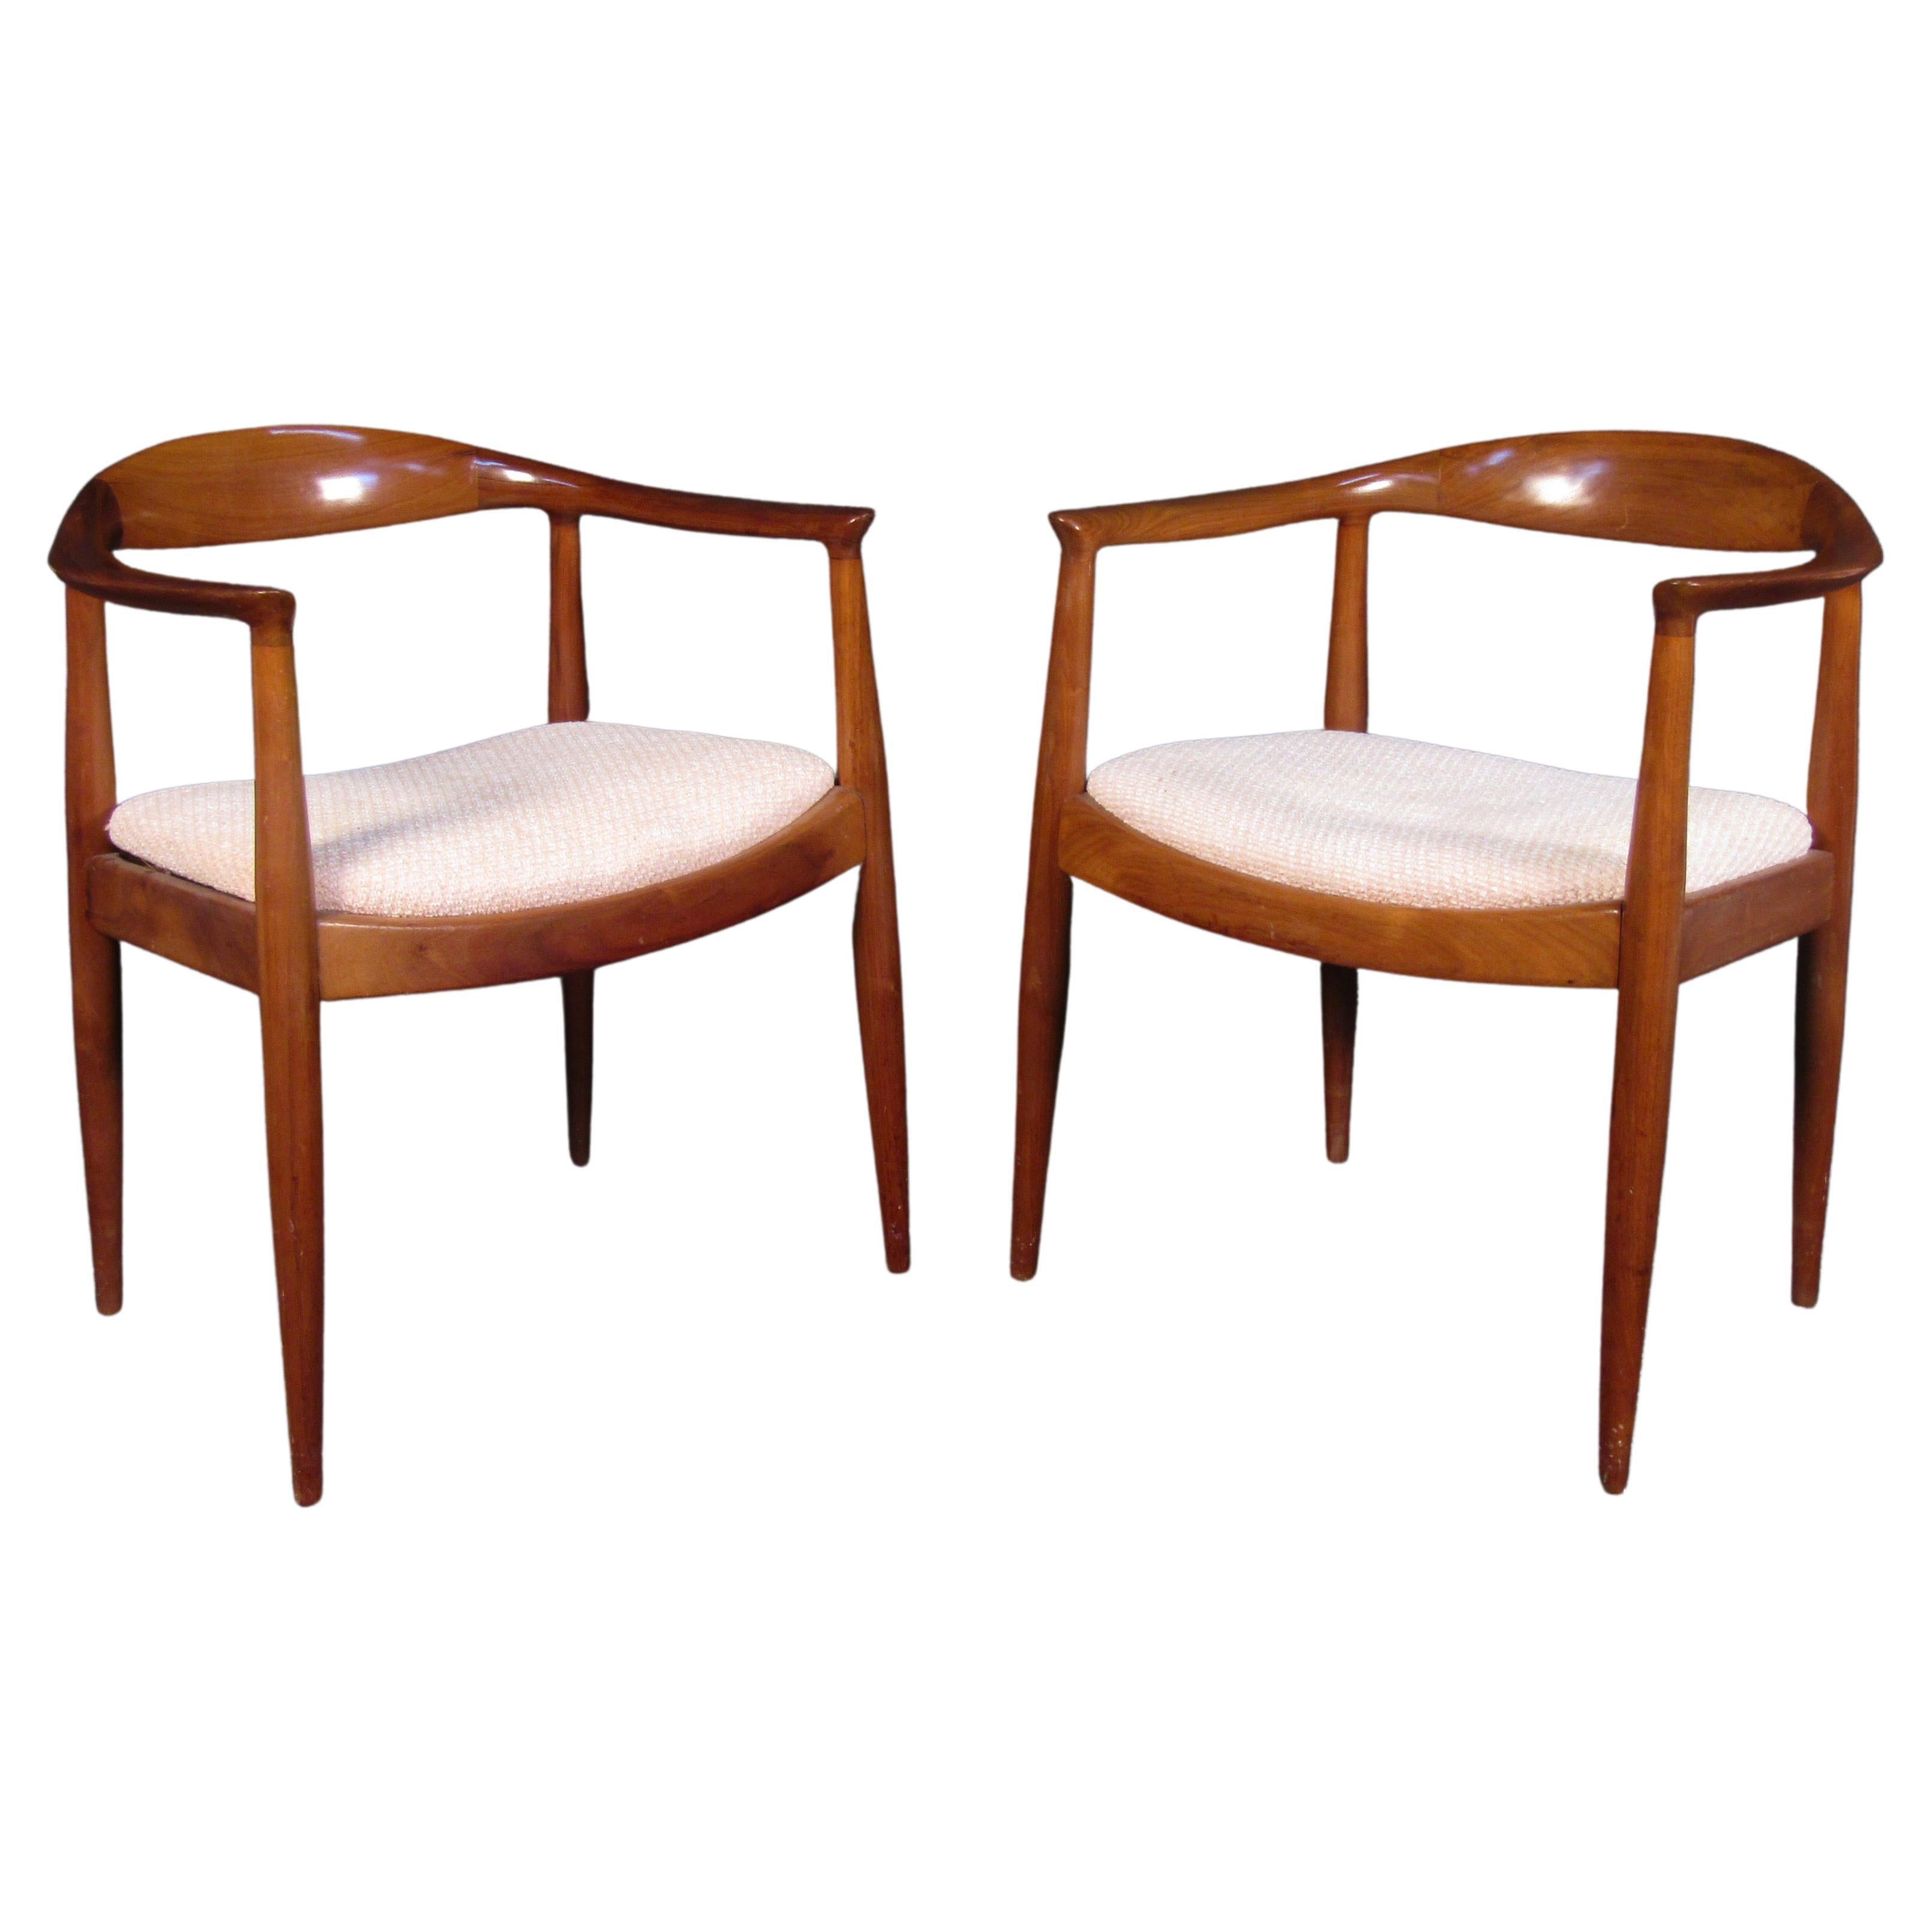 Mid-Century Hans Wegner style Walnut Chairs